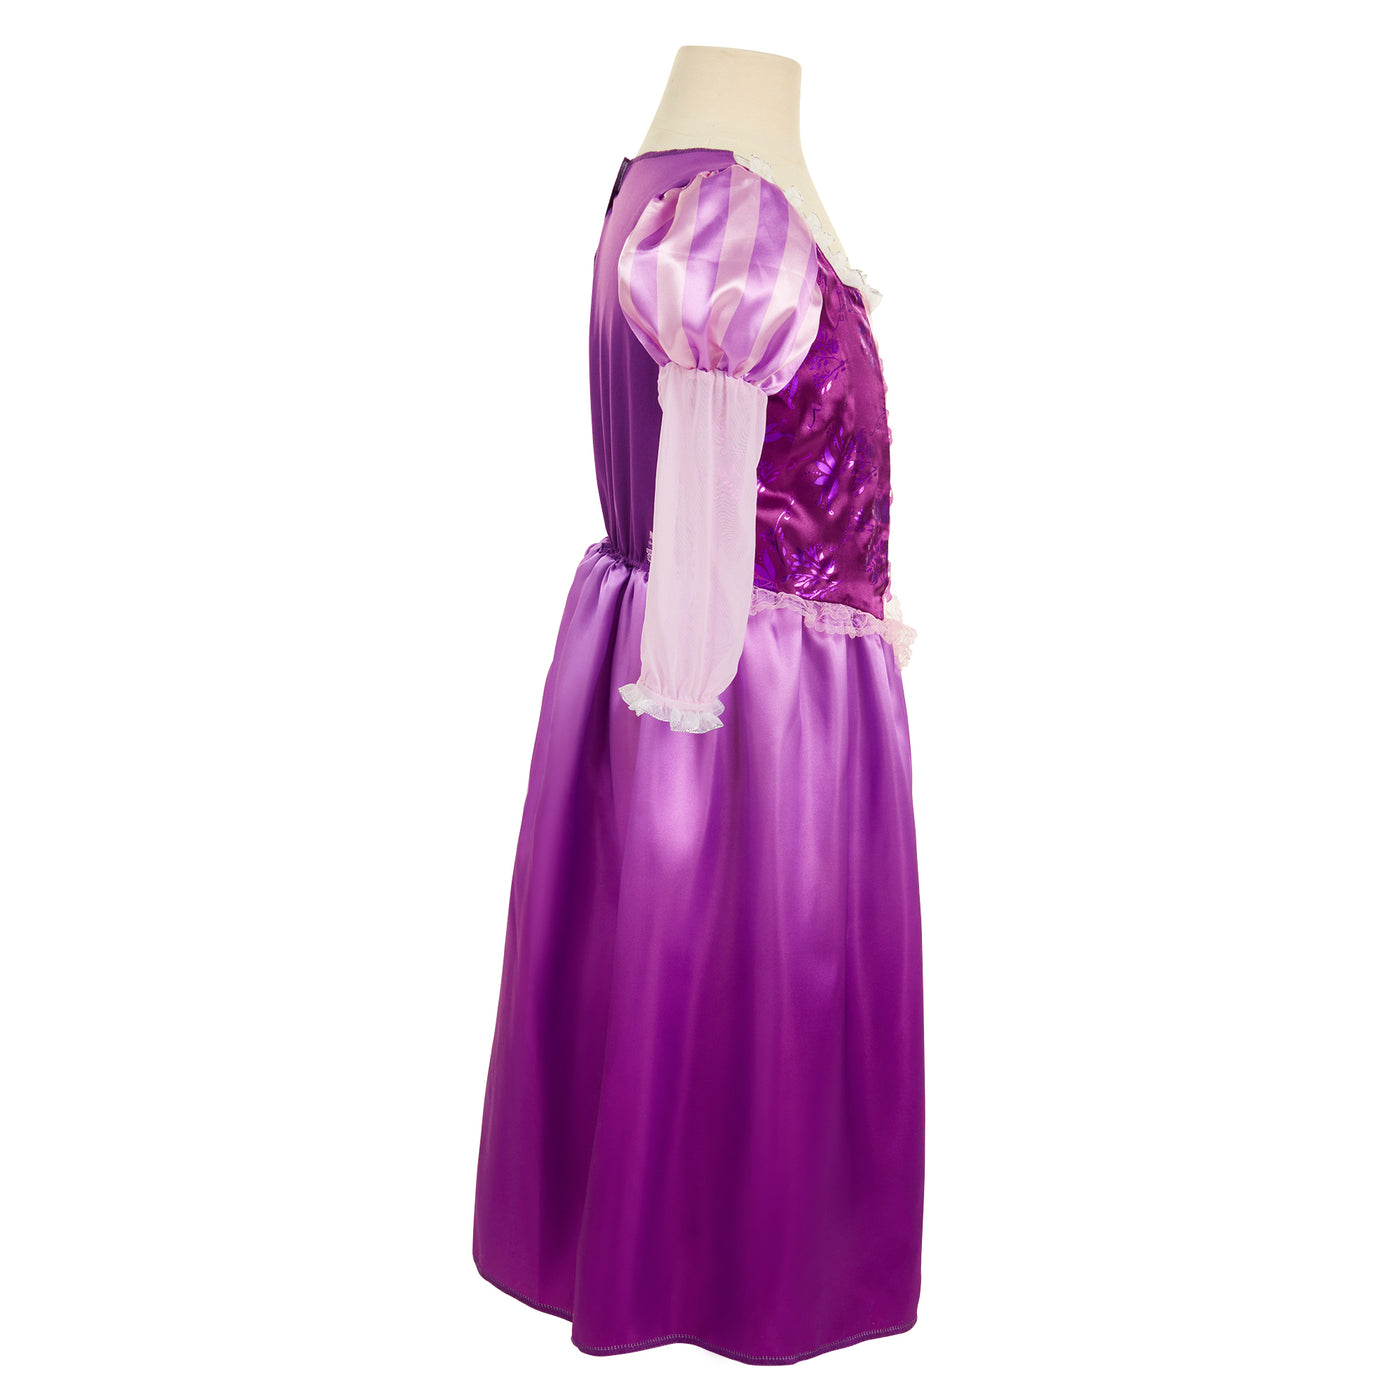 Disney Tangled The Series Rapunzel Dress